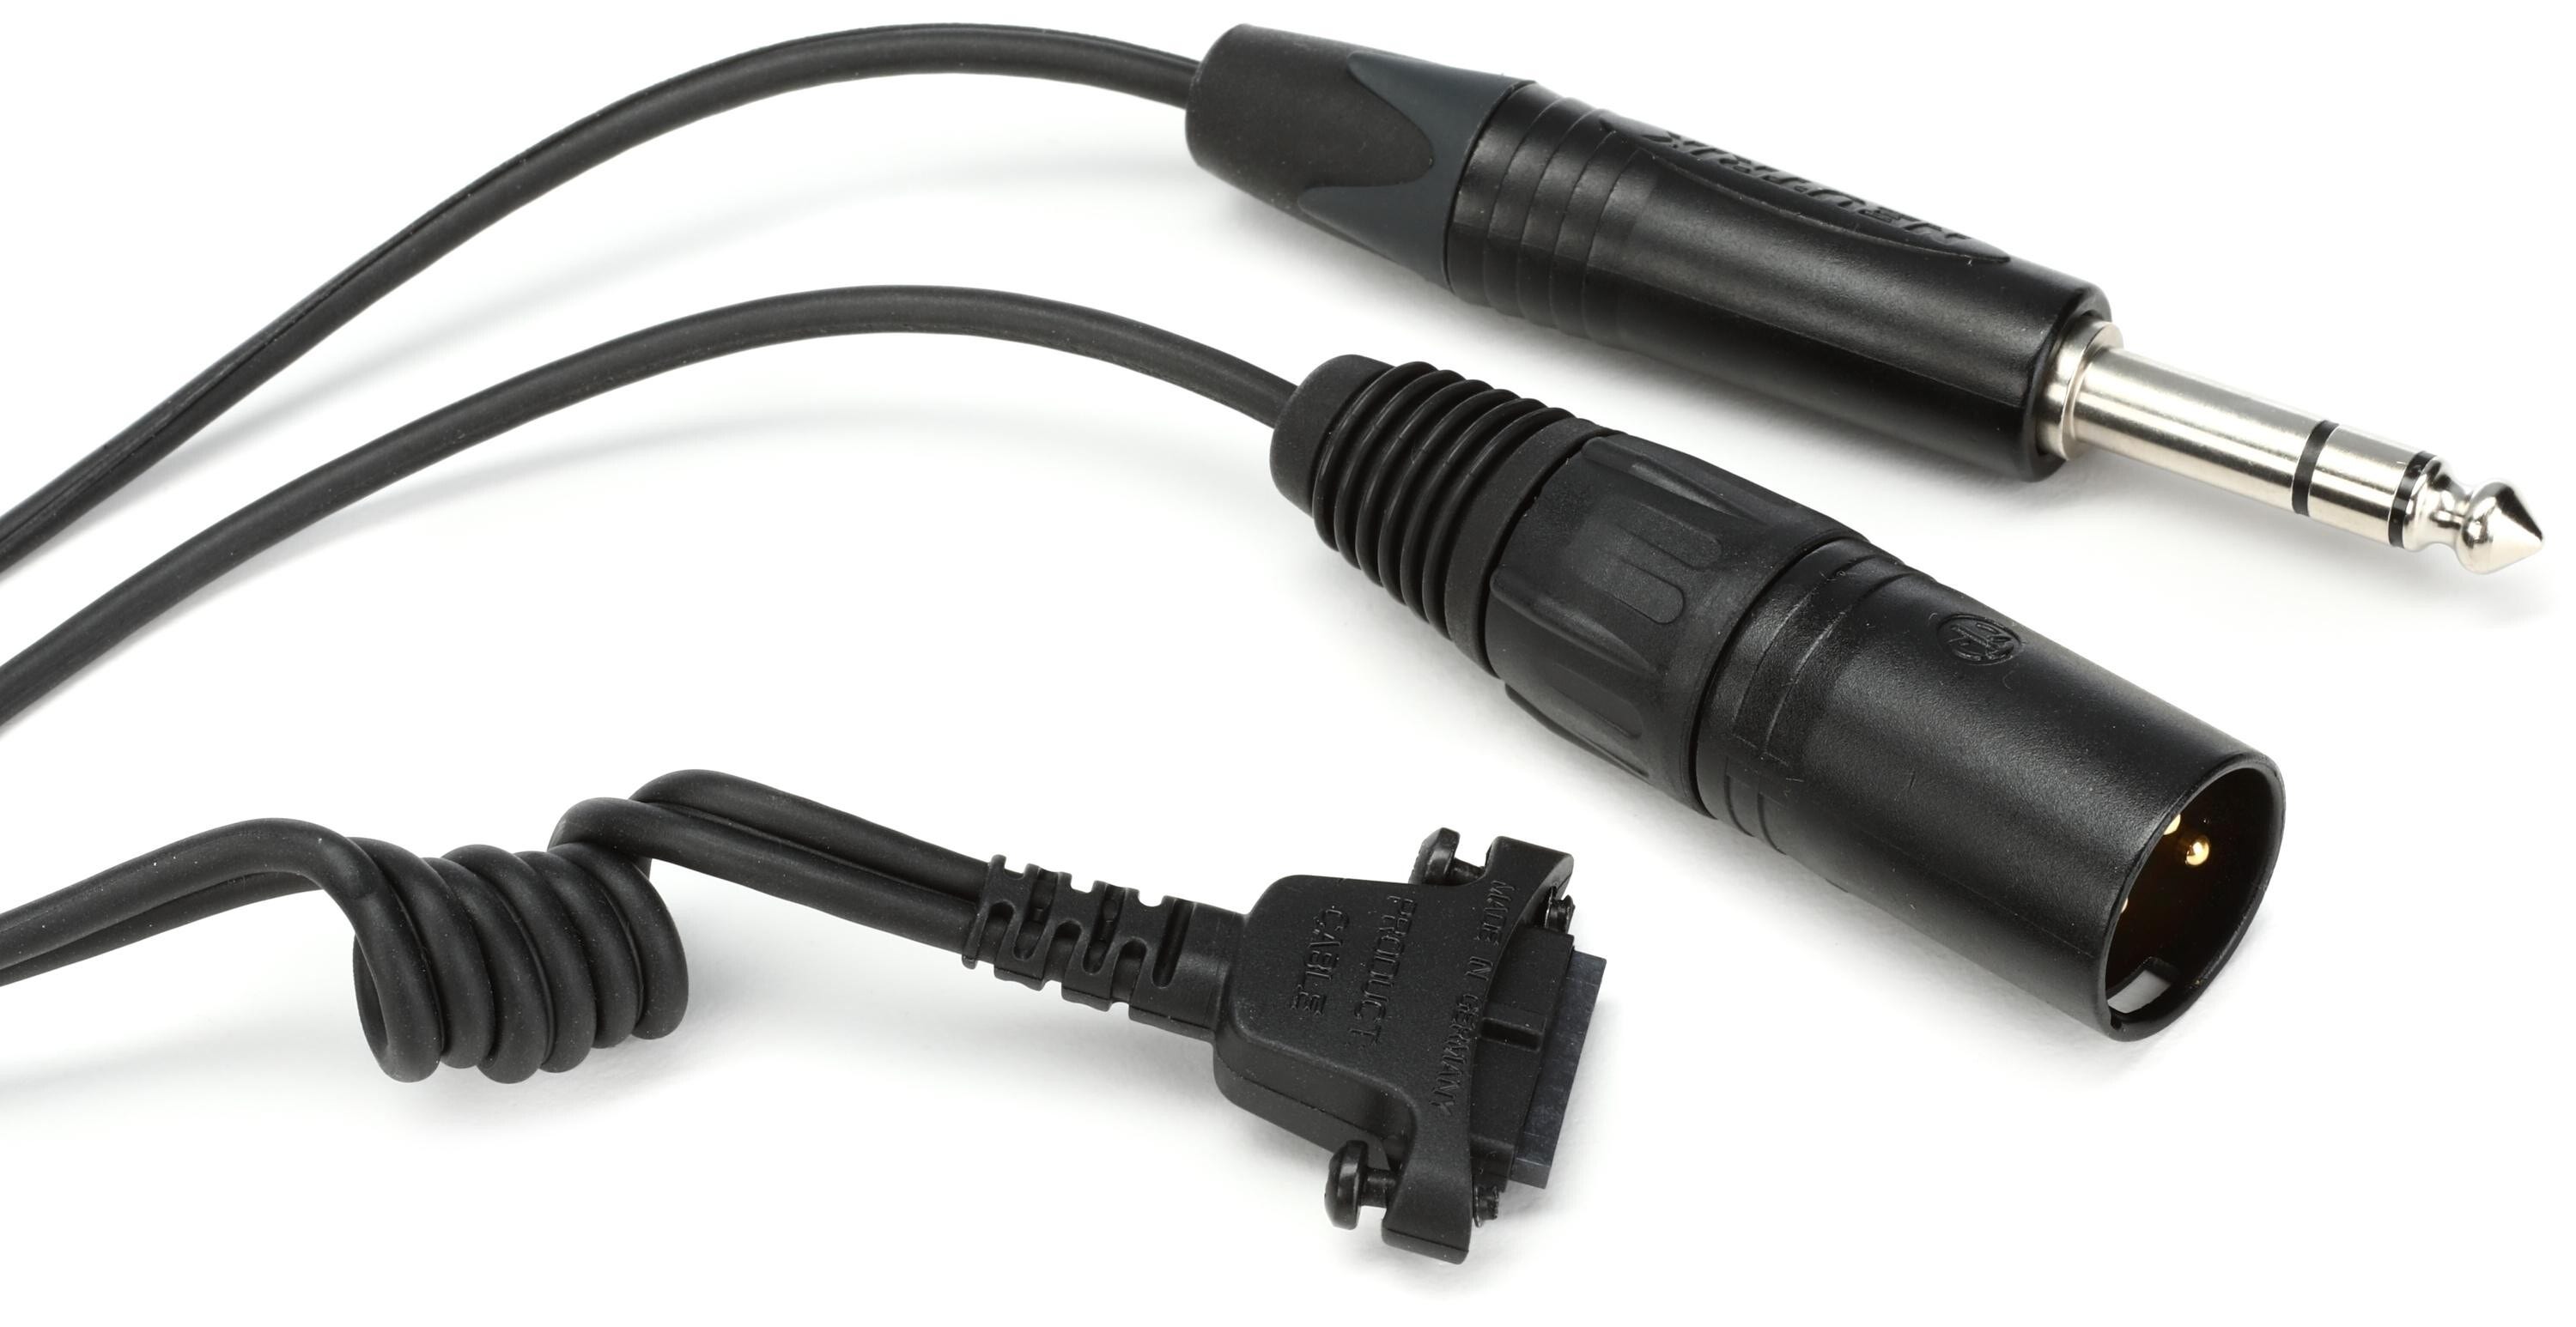 Sennheiser CABLE-II-X3K1-GOLD 2m Straight Audio Cable, XLR 3-Pin & 1/4  Plug 508546